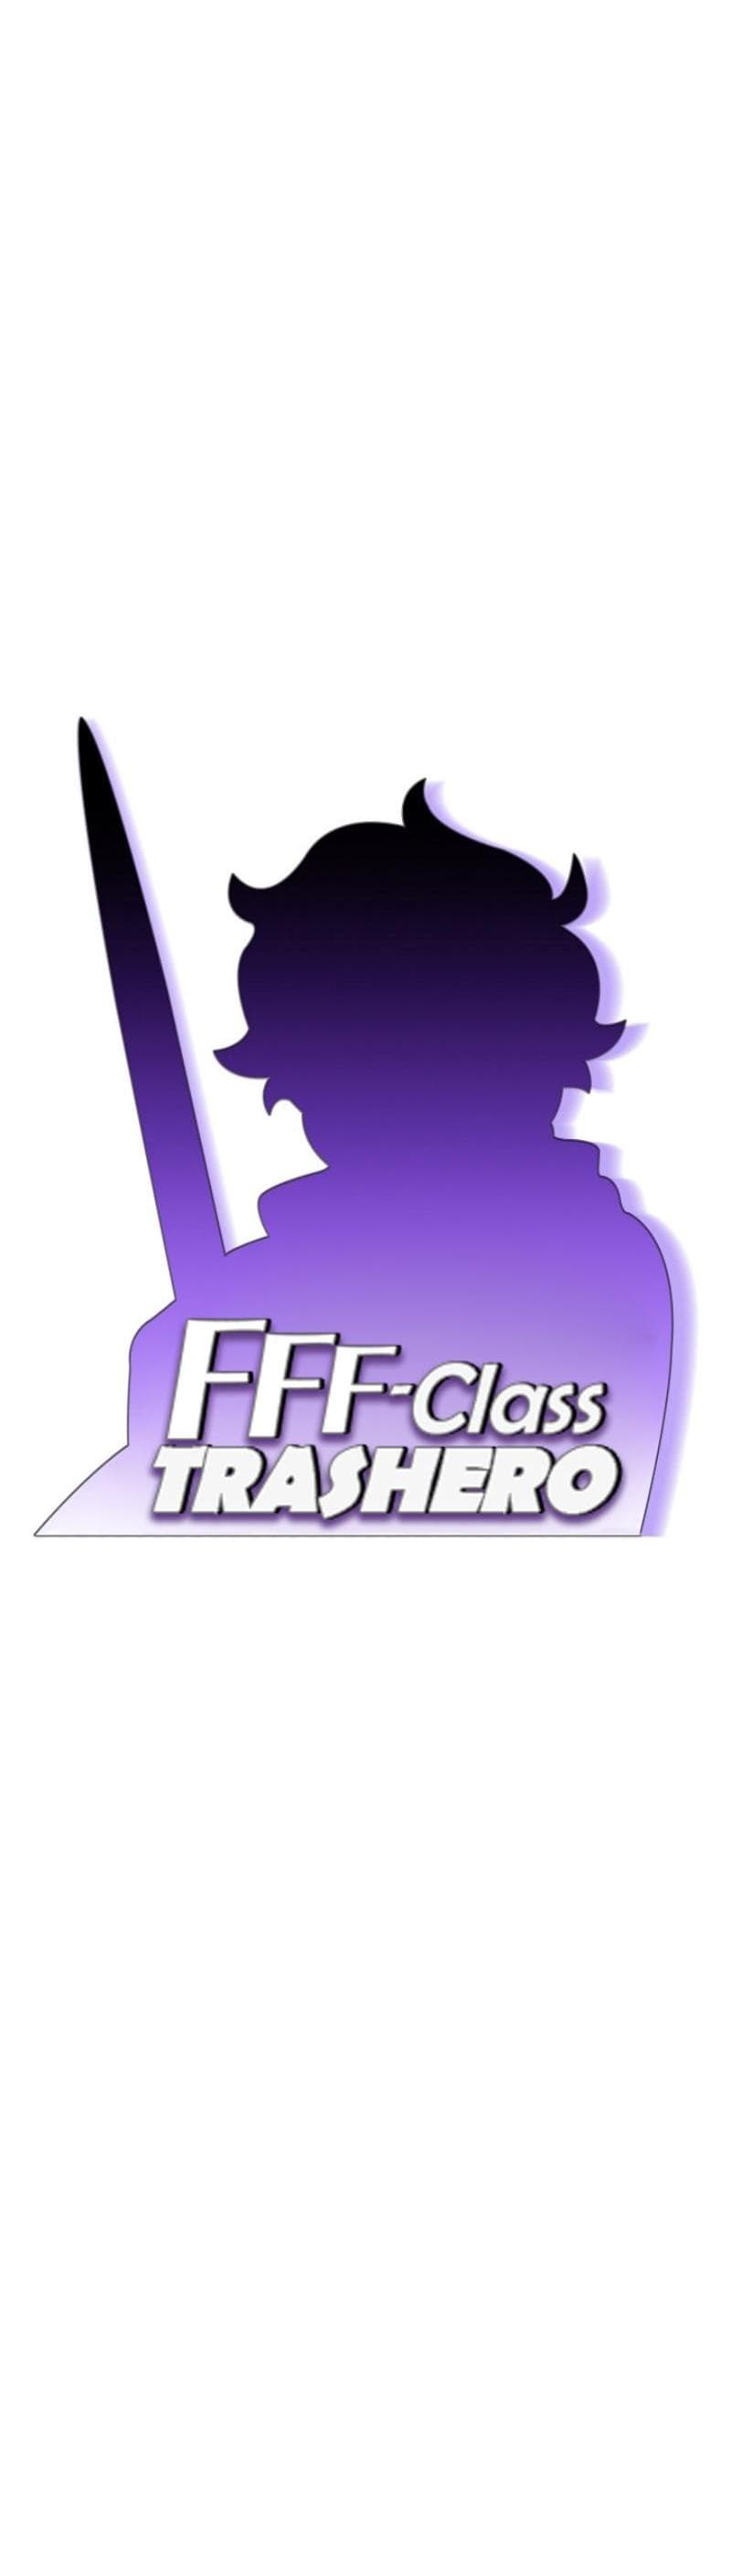 FFF Class Trashero 33 20